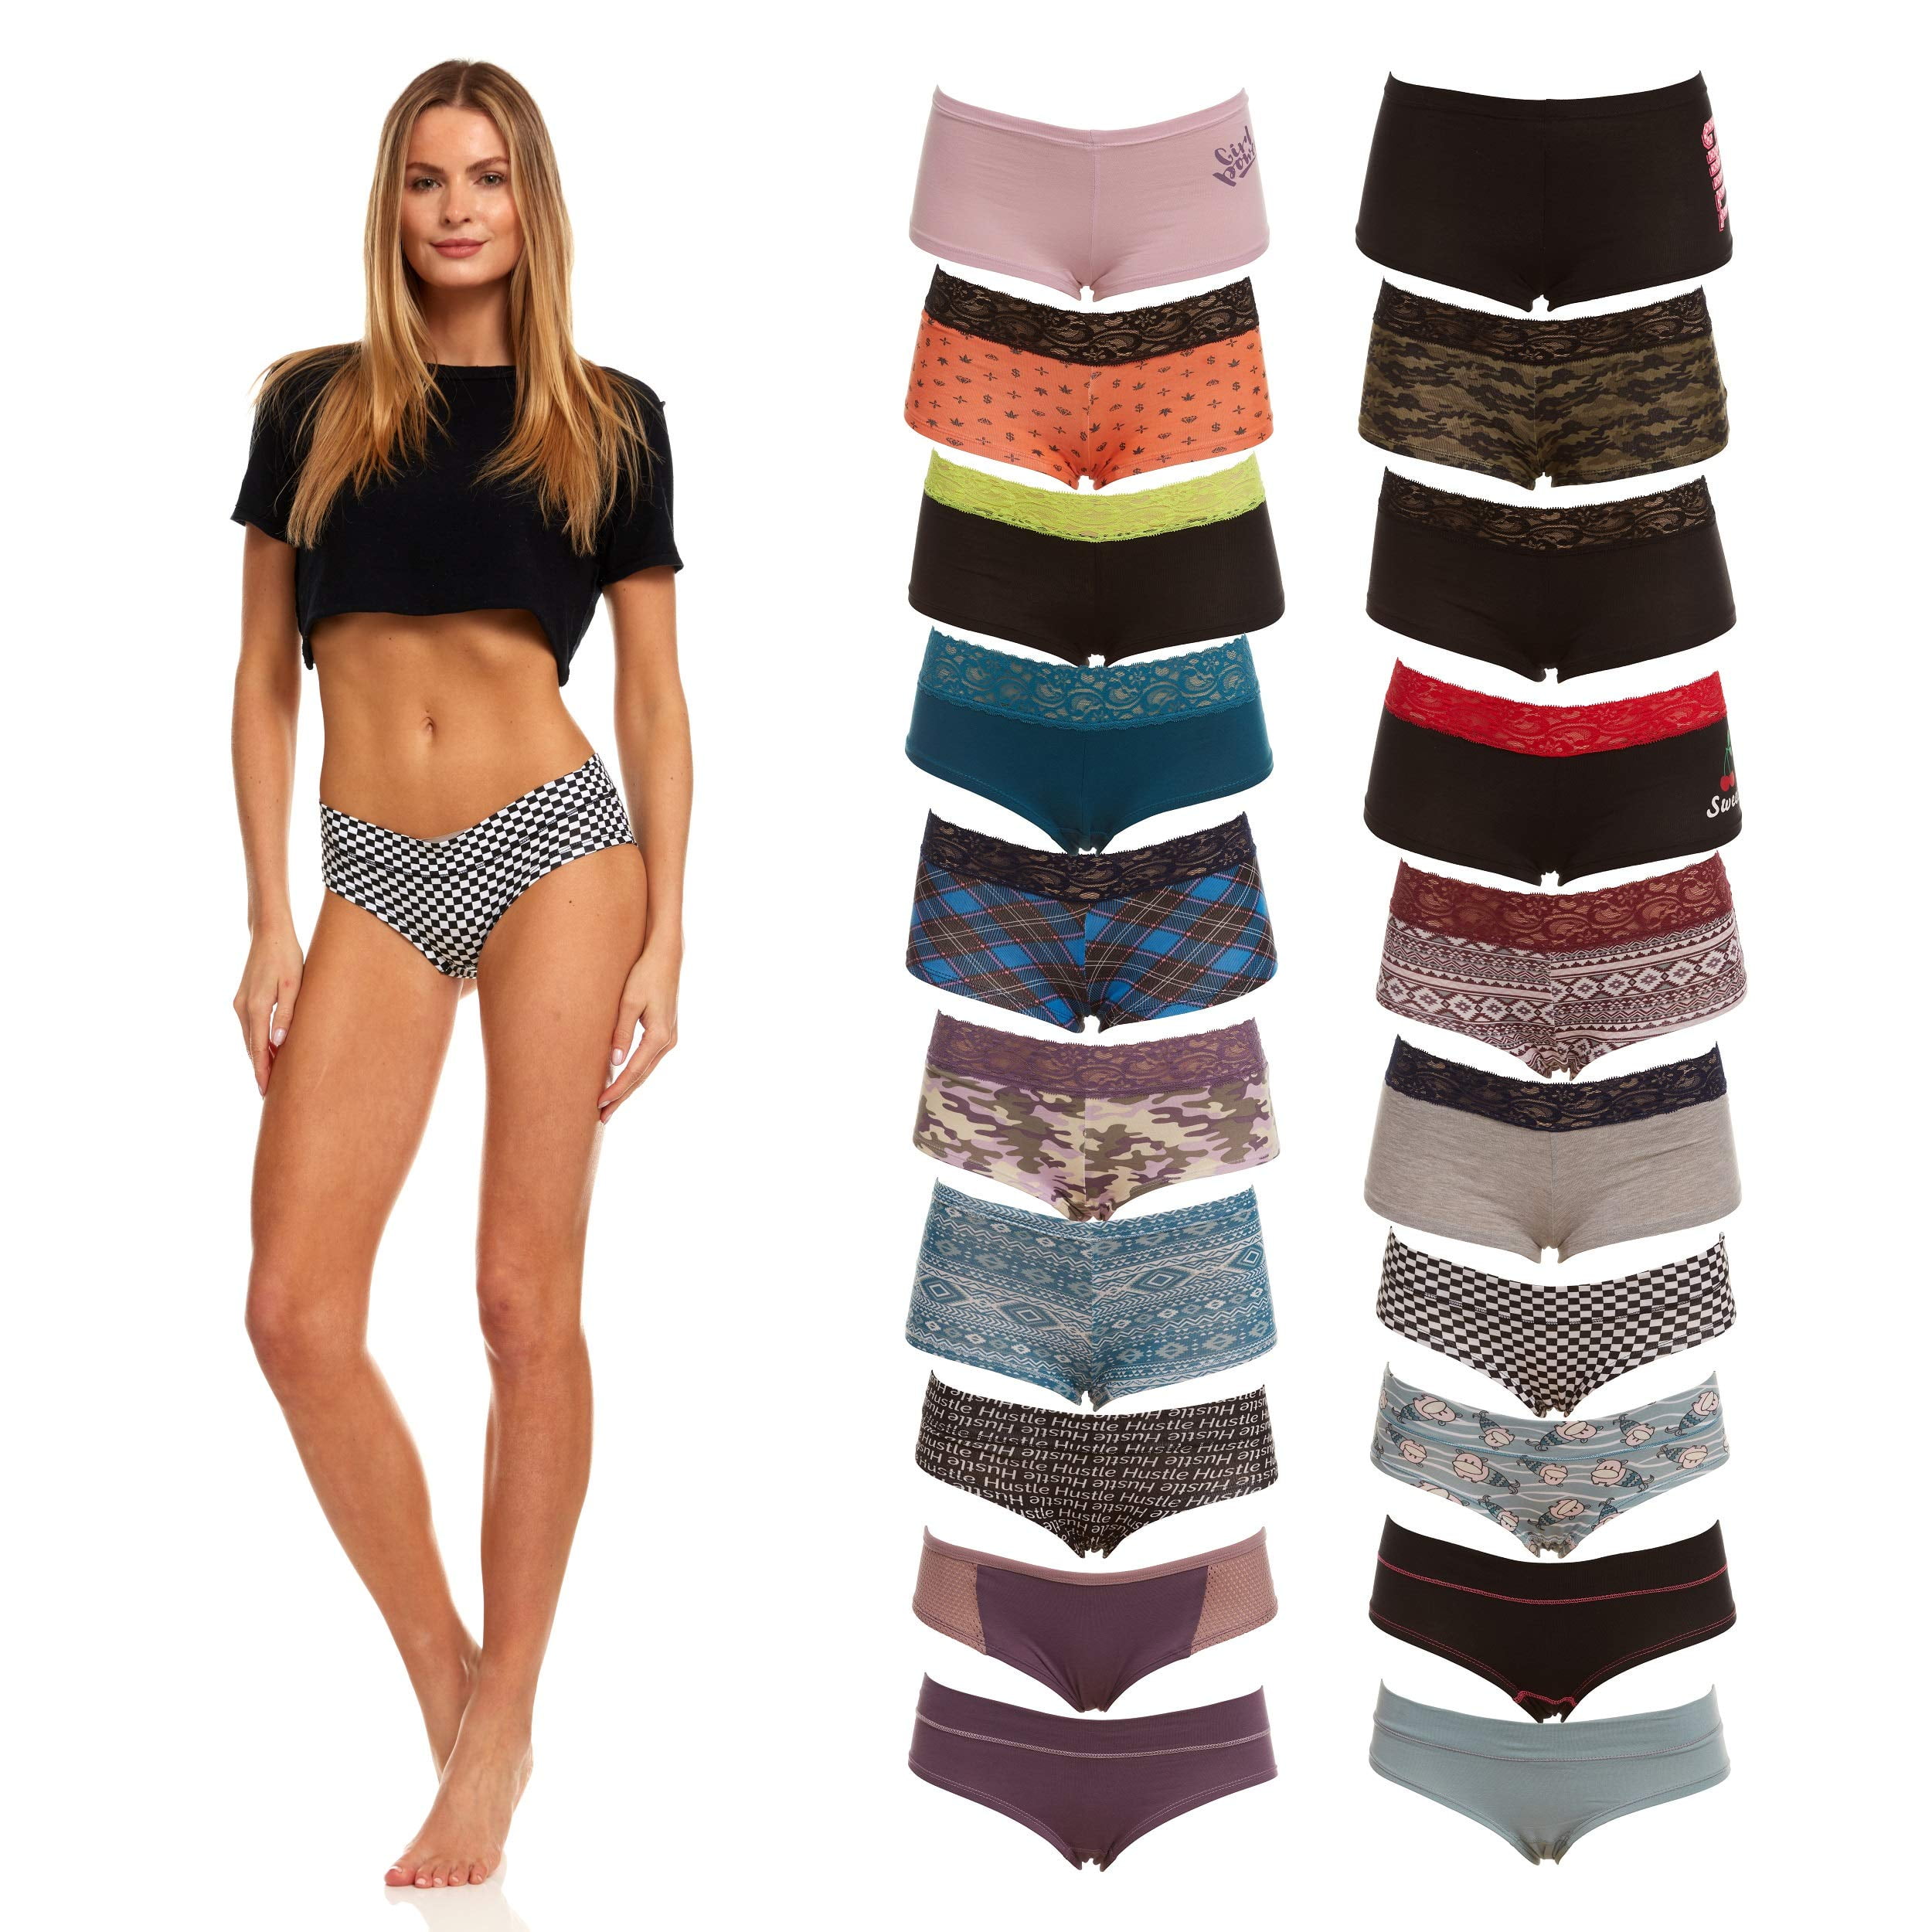 Womens Bulk Underwear Panties - 95% Cotton - Mixed Assorted Prints Low rise  bikini Packs, Seamless, Lay, Thongs, Boy Shorts, Patterns (20 Pack